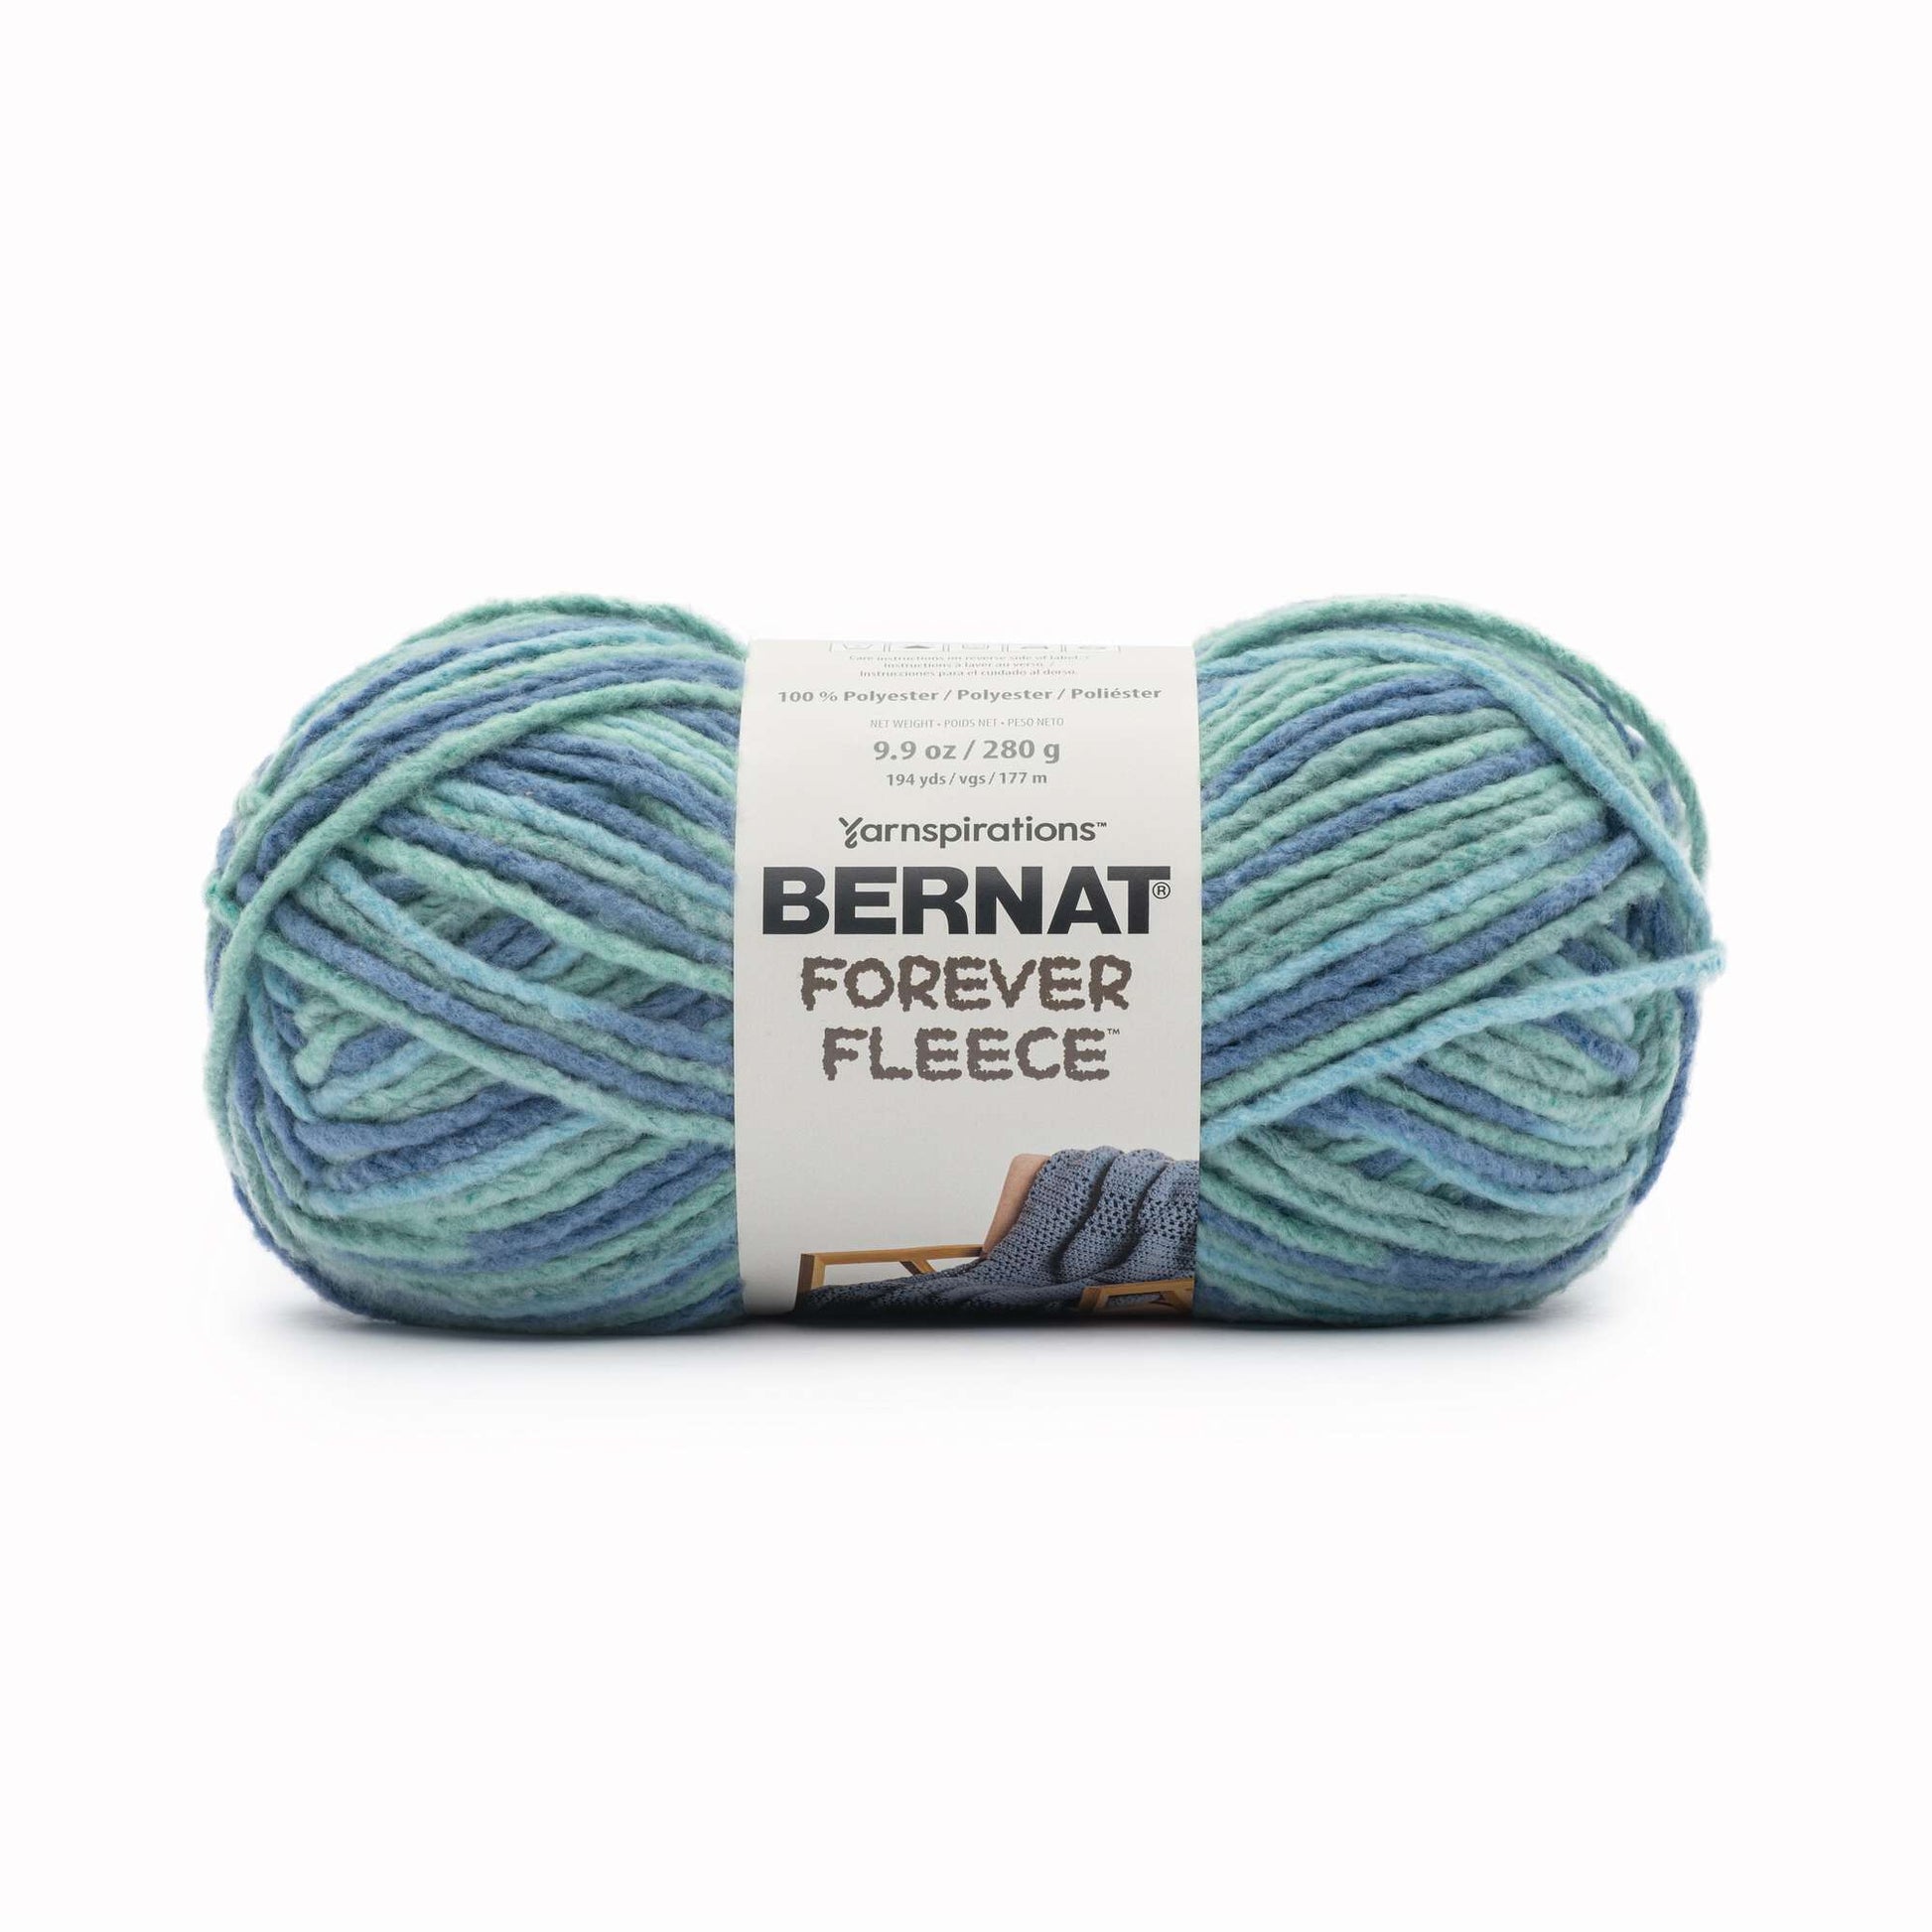 Bernat Forever Fleece Yarn (280 g/9.9 oz), Sea Glass